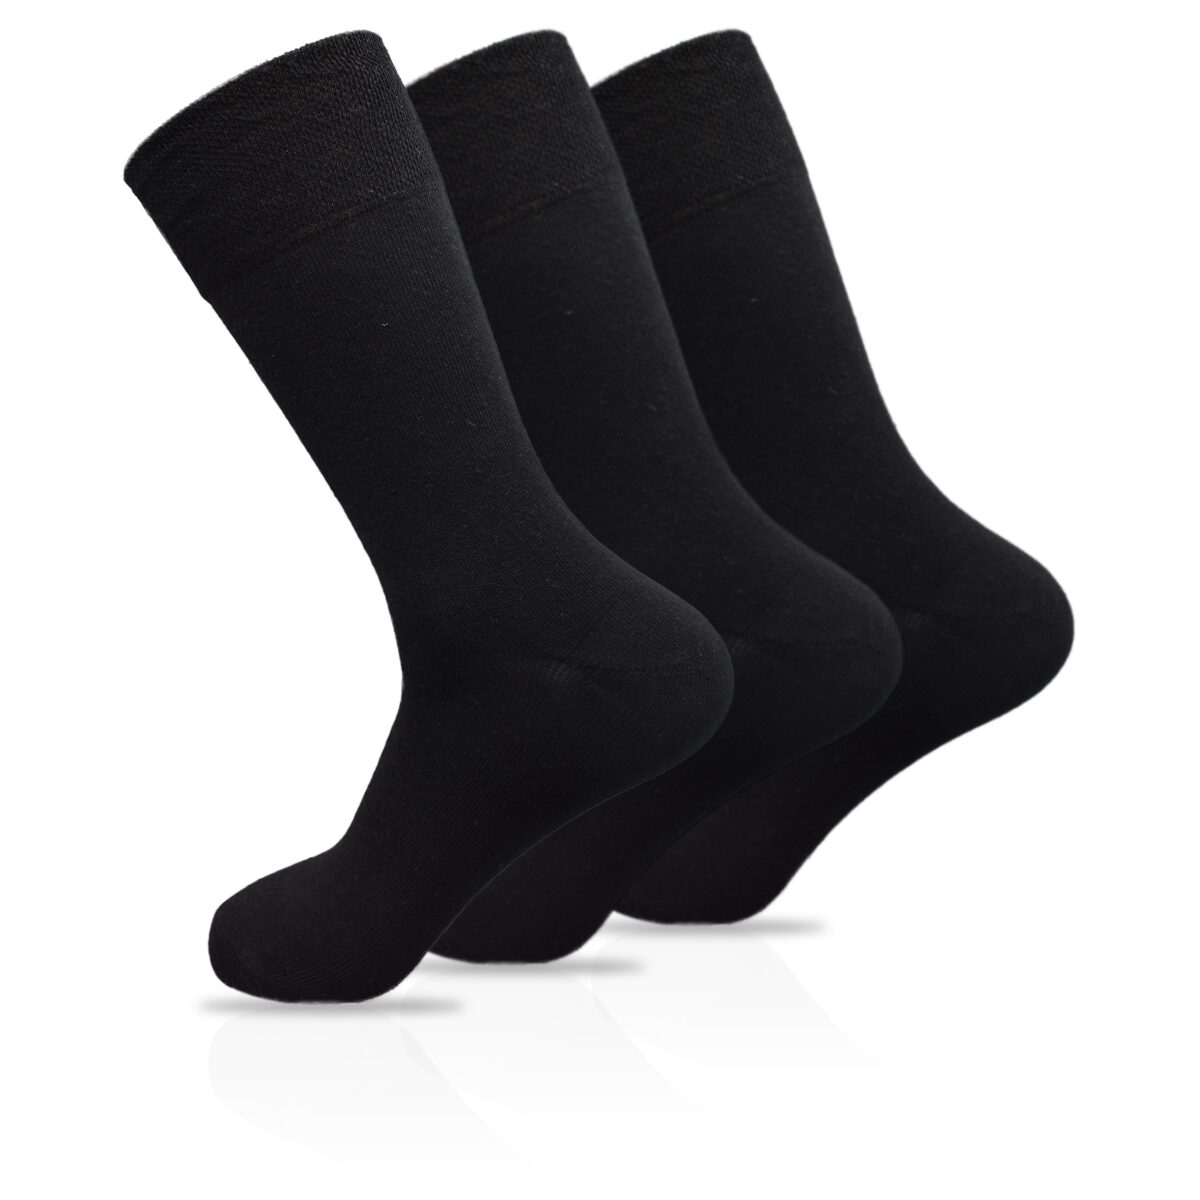 3x Pairs Of Men's Black Diabetic Socks - Nuova Health